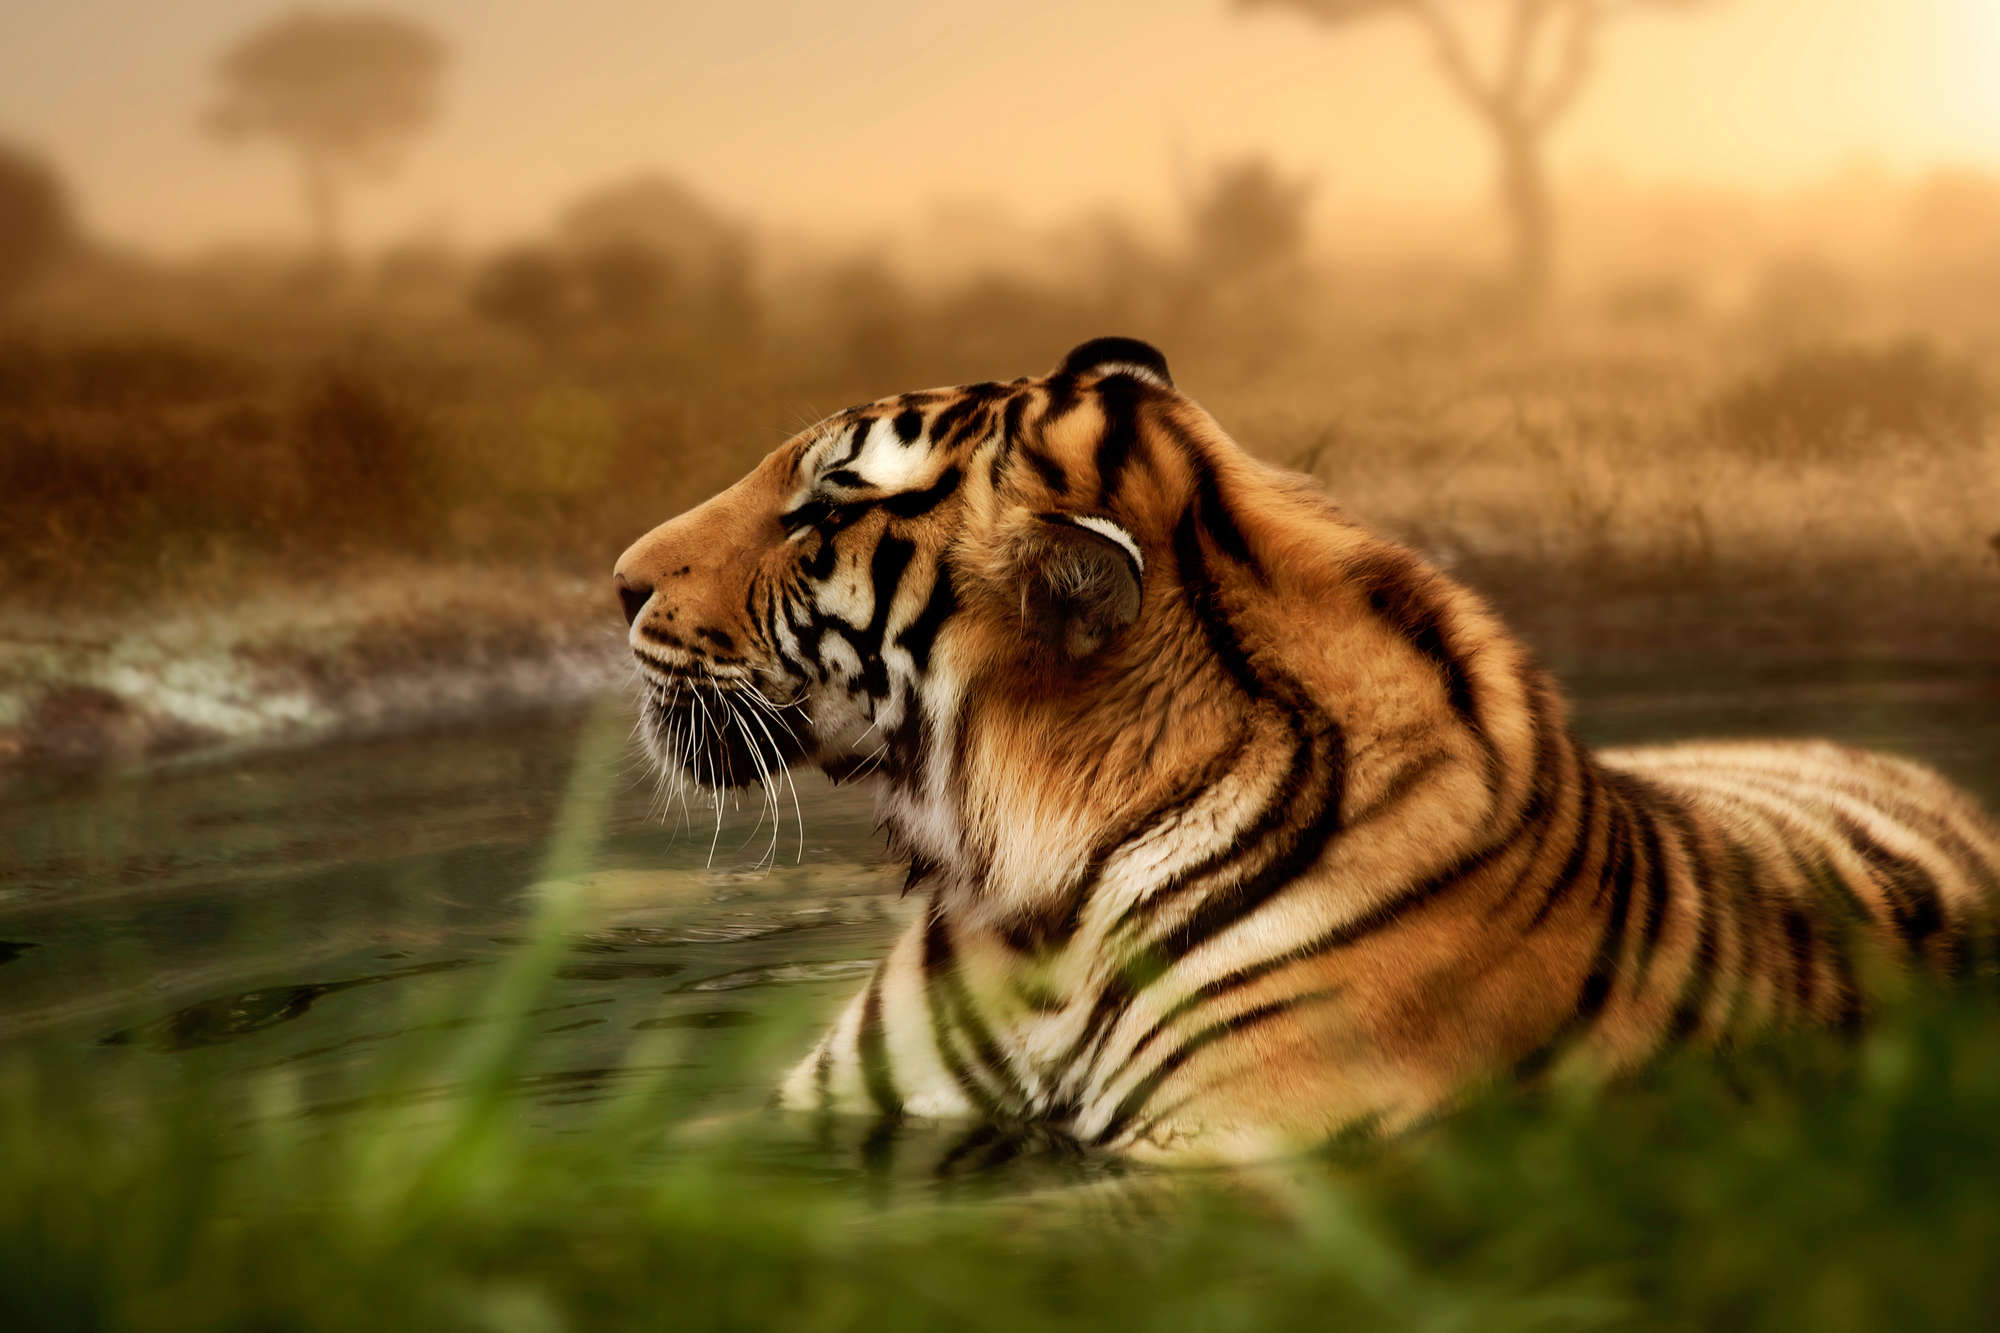             Papel pintado de tigre en la naturaleza sobre vellón liso de primera calidad
        